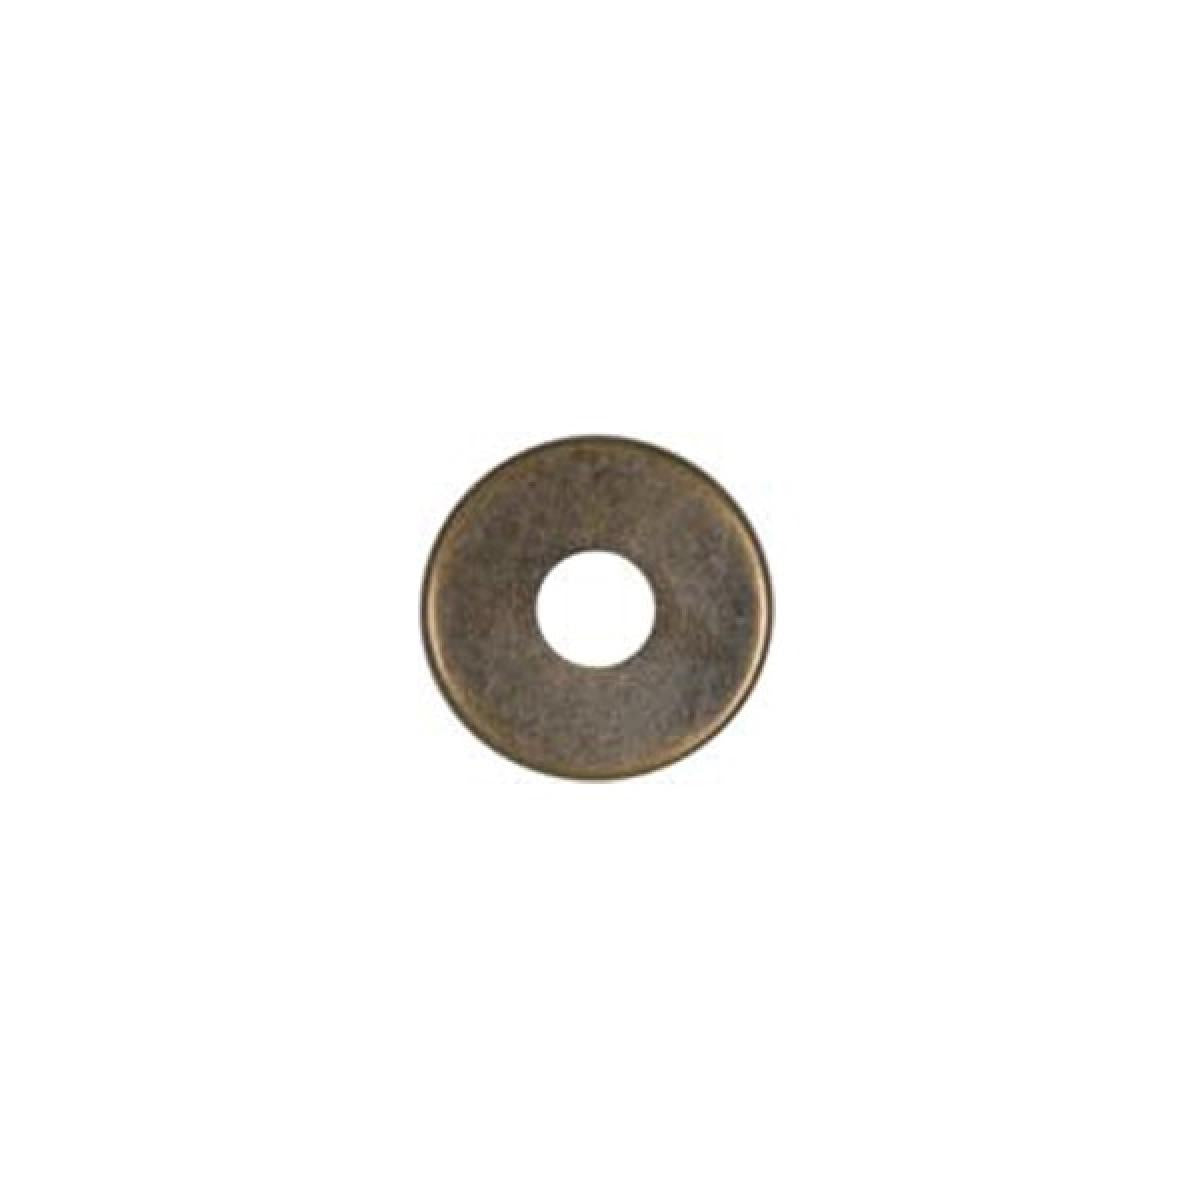 Satco 90-1763 Steel Check Ring Curled Edge 1/8 IP Slip Antique Brass Finish 1-1/2" Diameter